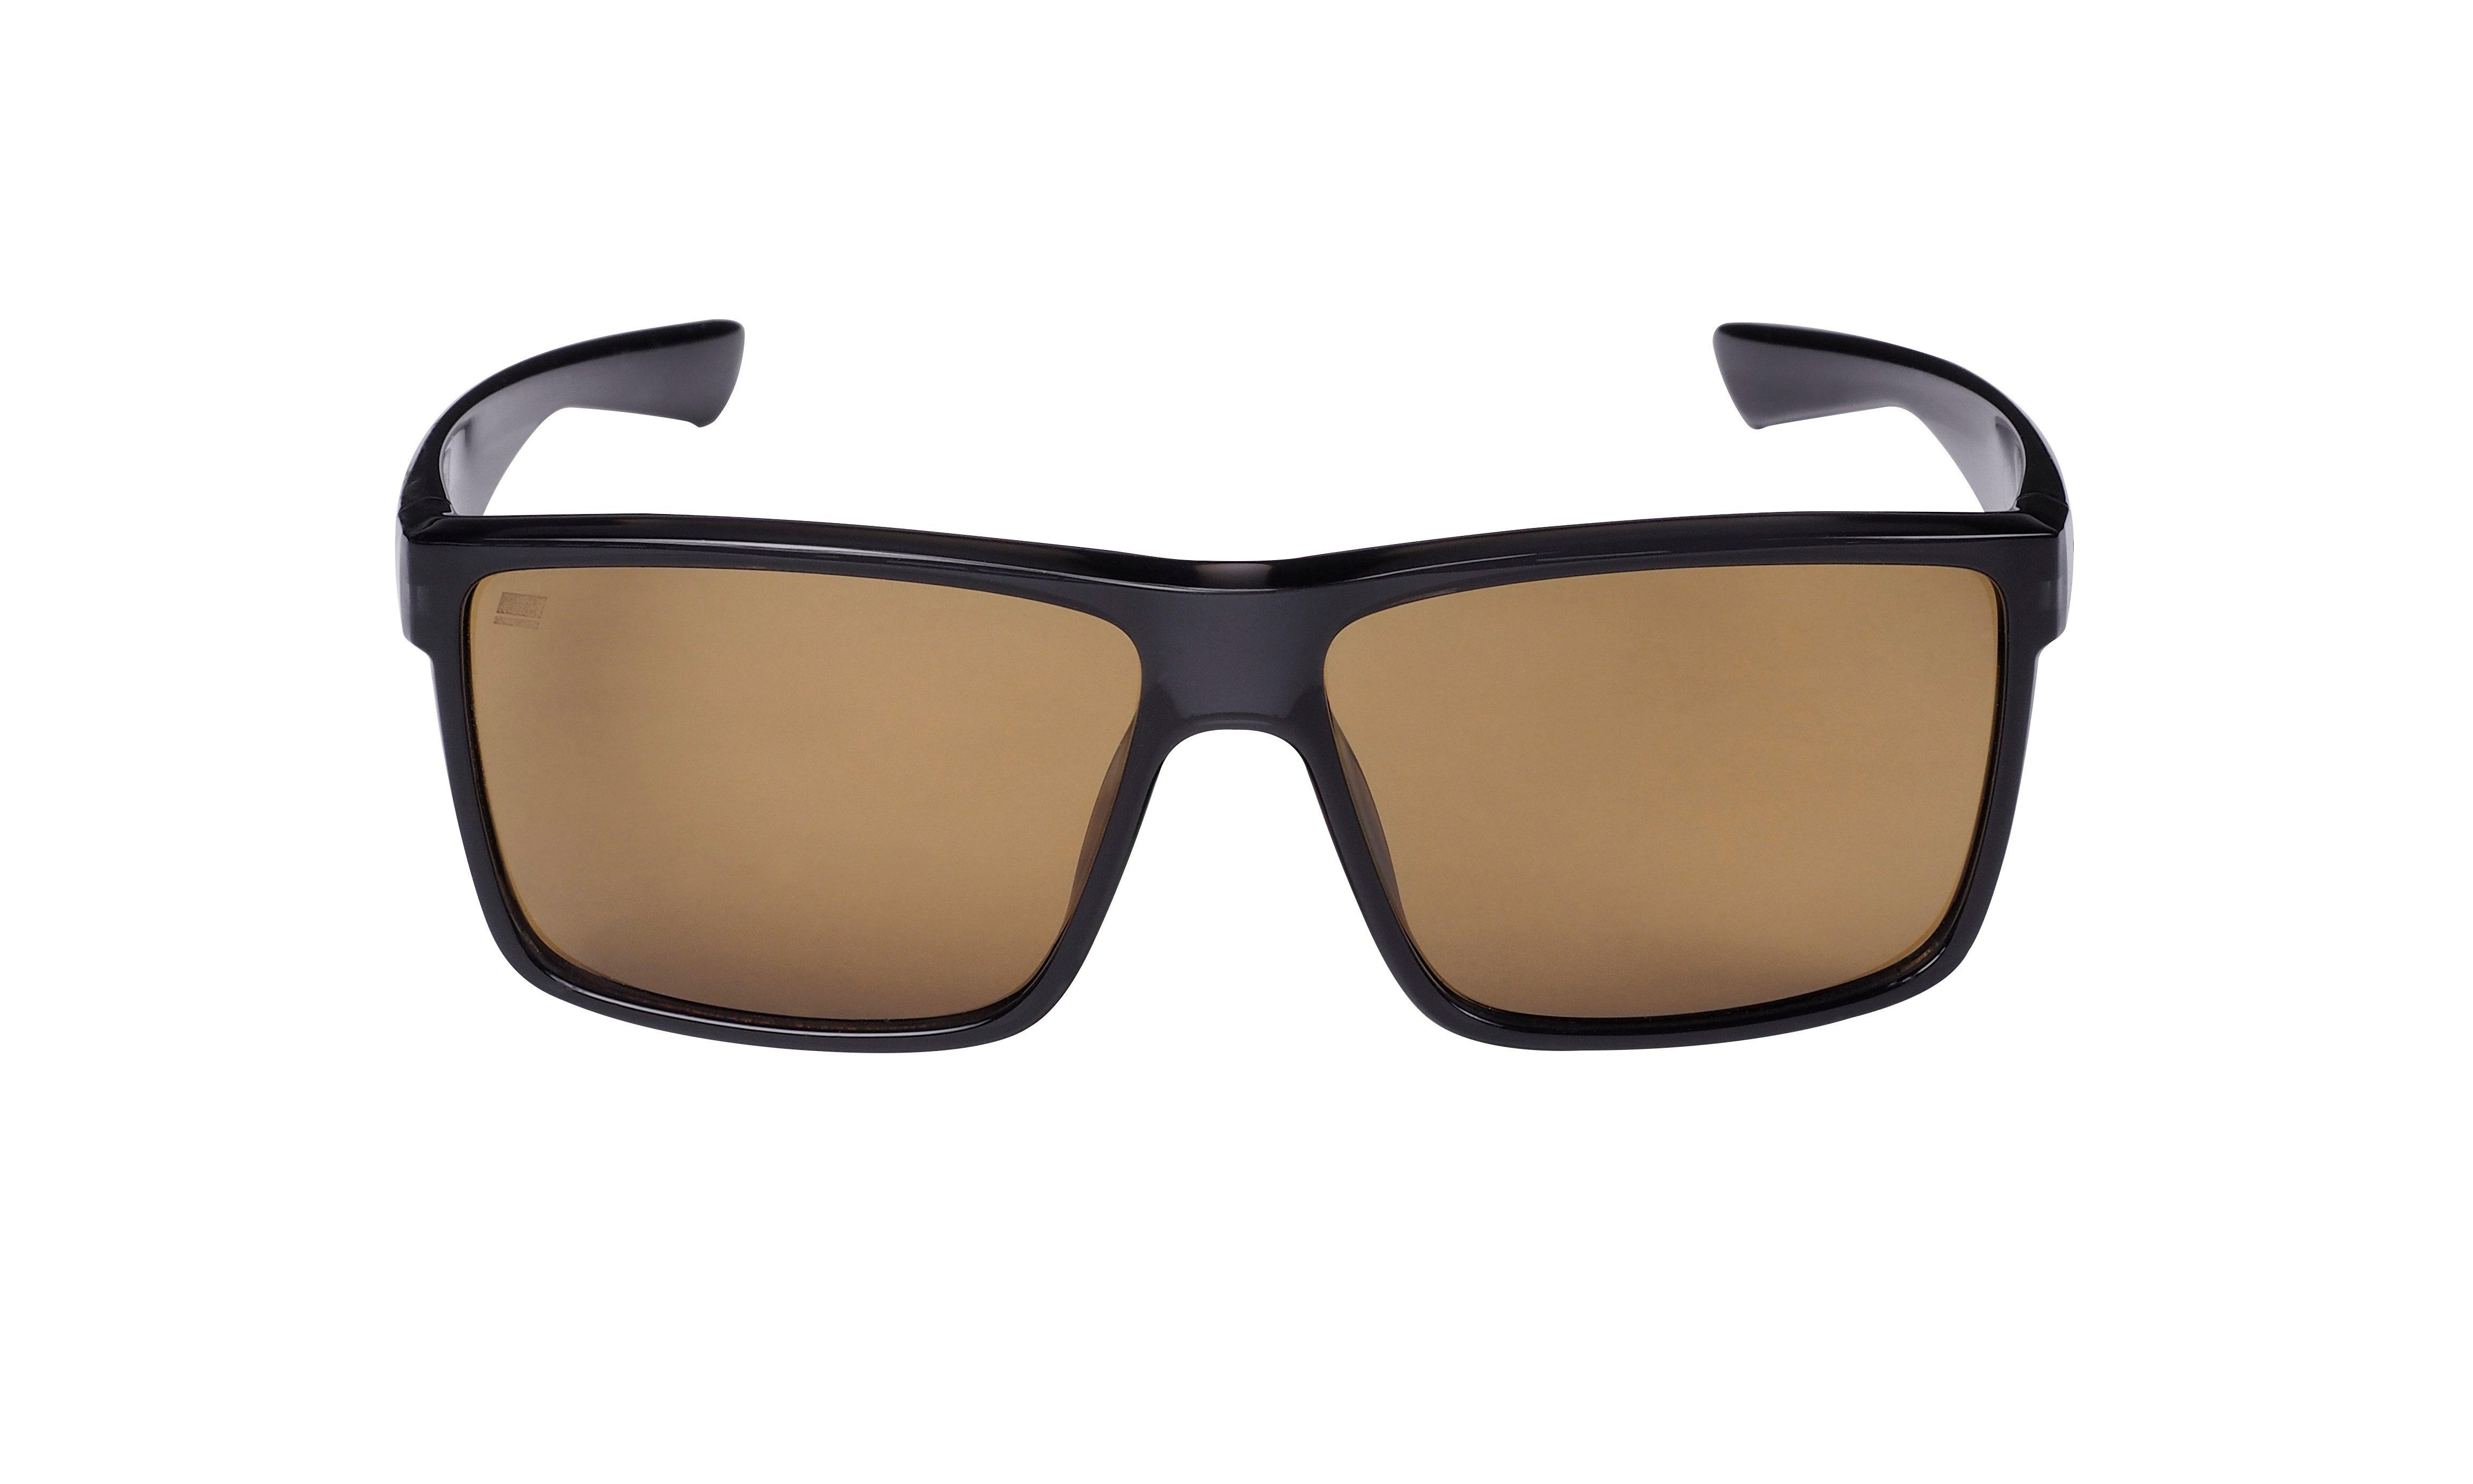 Abu Garcia Spike Eyewear Polarized Sunglasses - Stone Amber